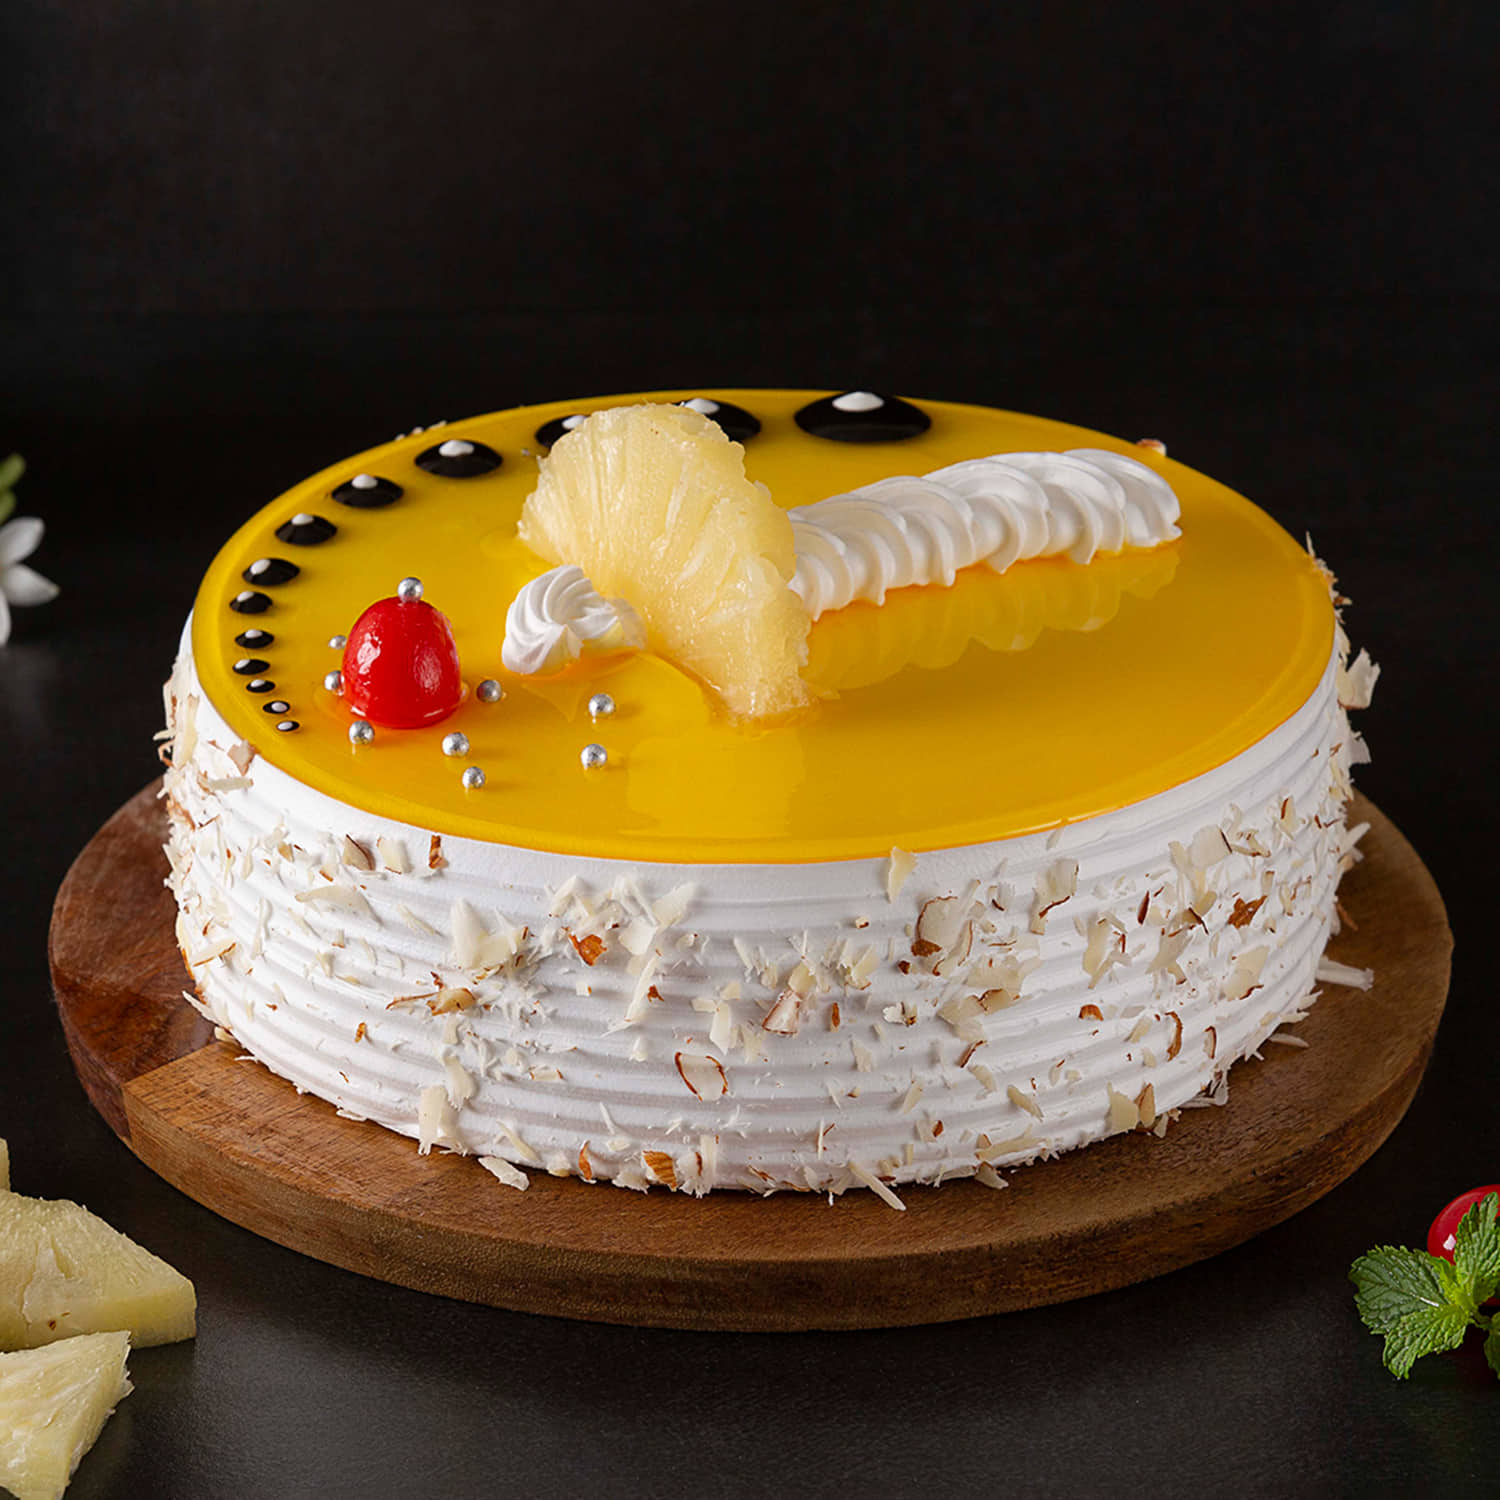 Cream in Cake Decoration - Cake Decorating Basics – Gayathri's Cook Spot